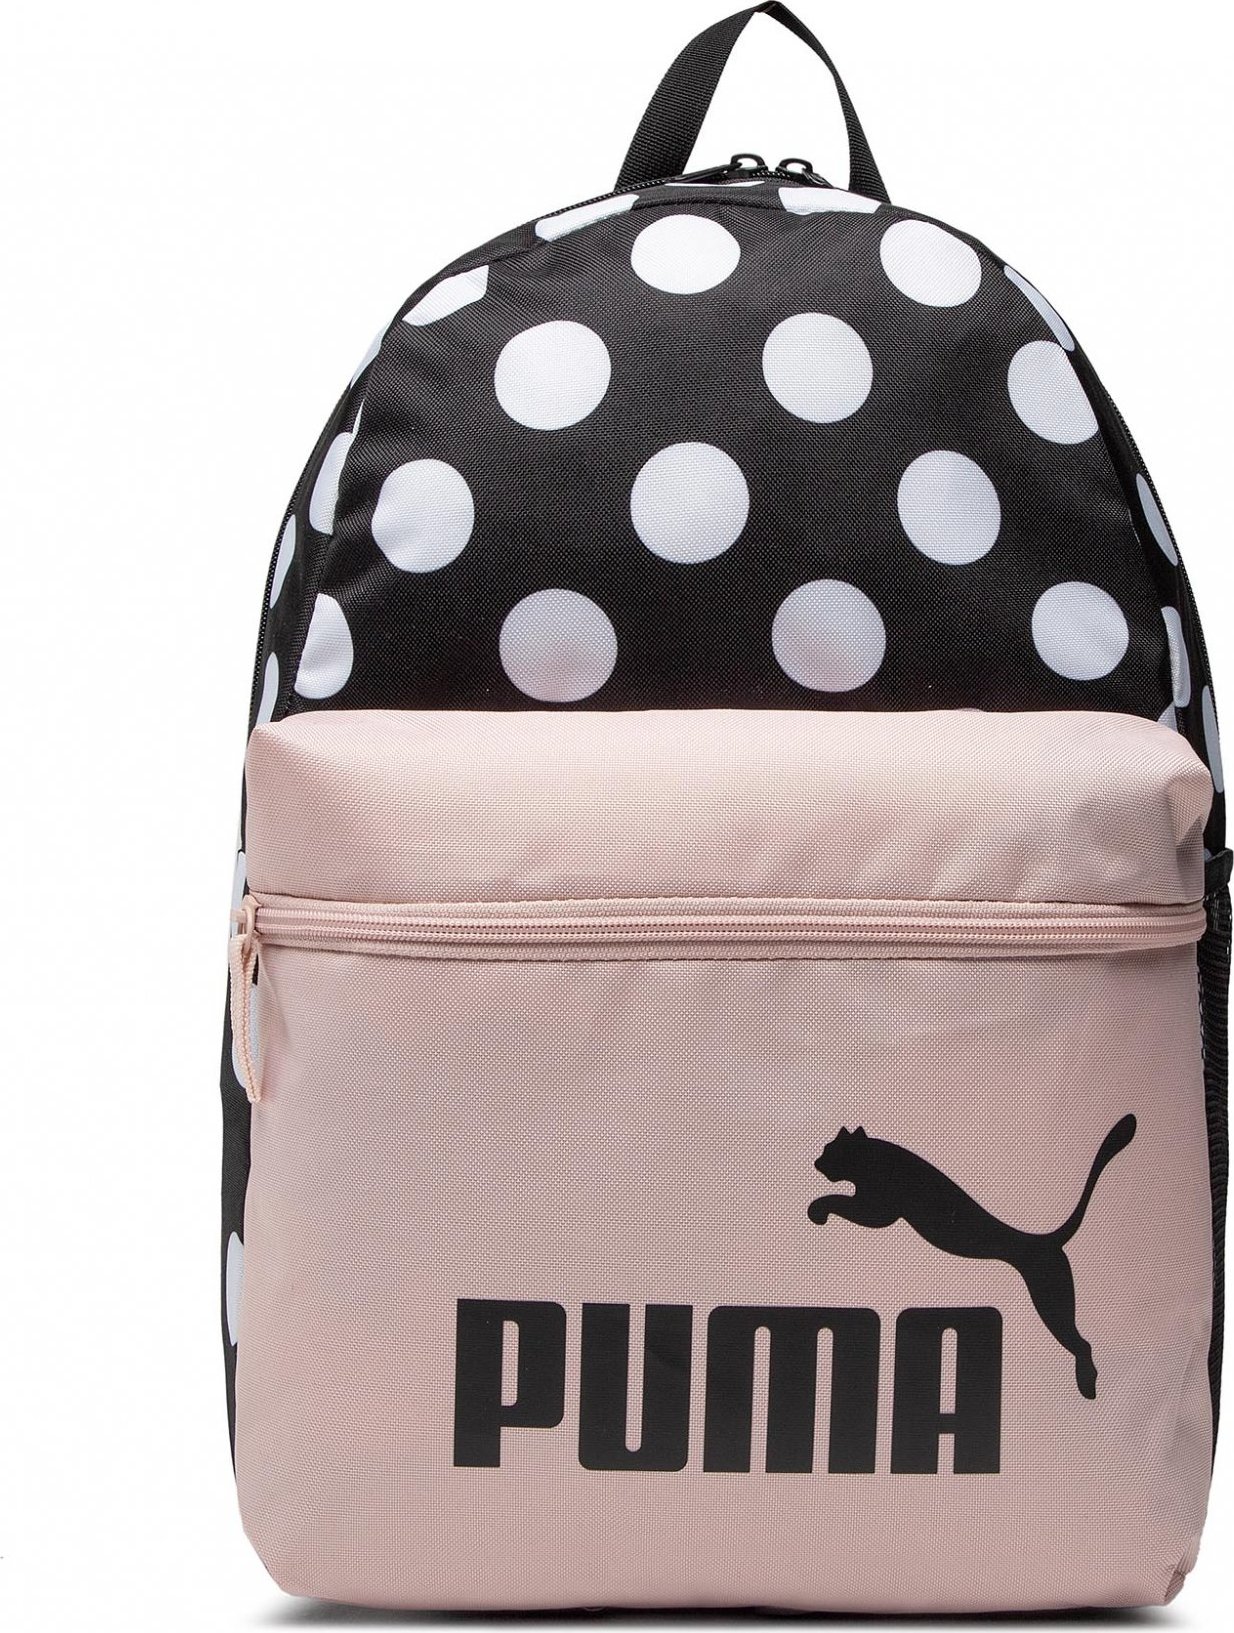 Puma Phase Aop Backpack 780460 09